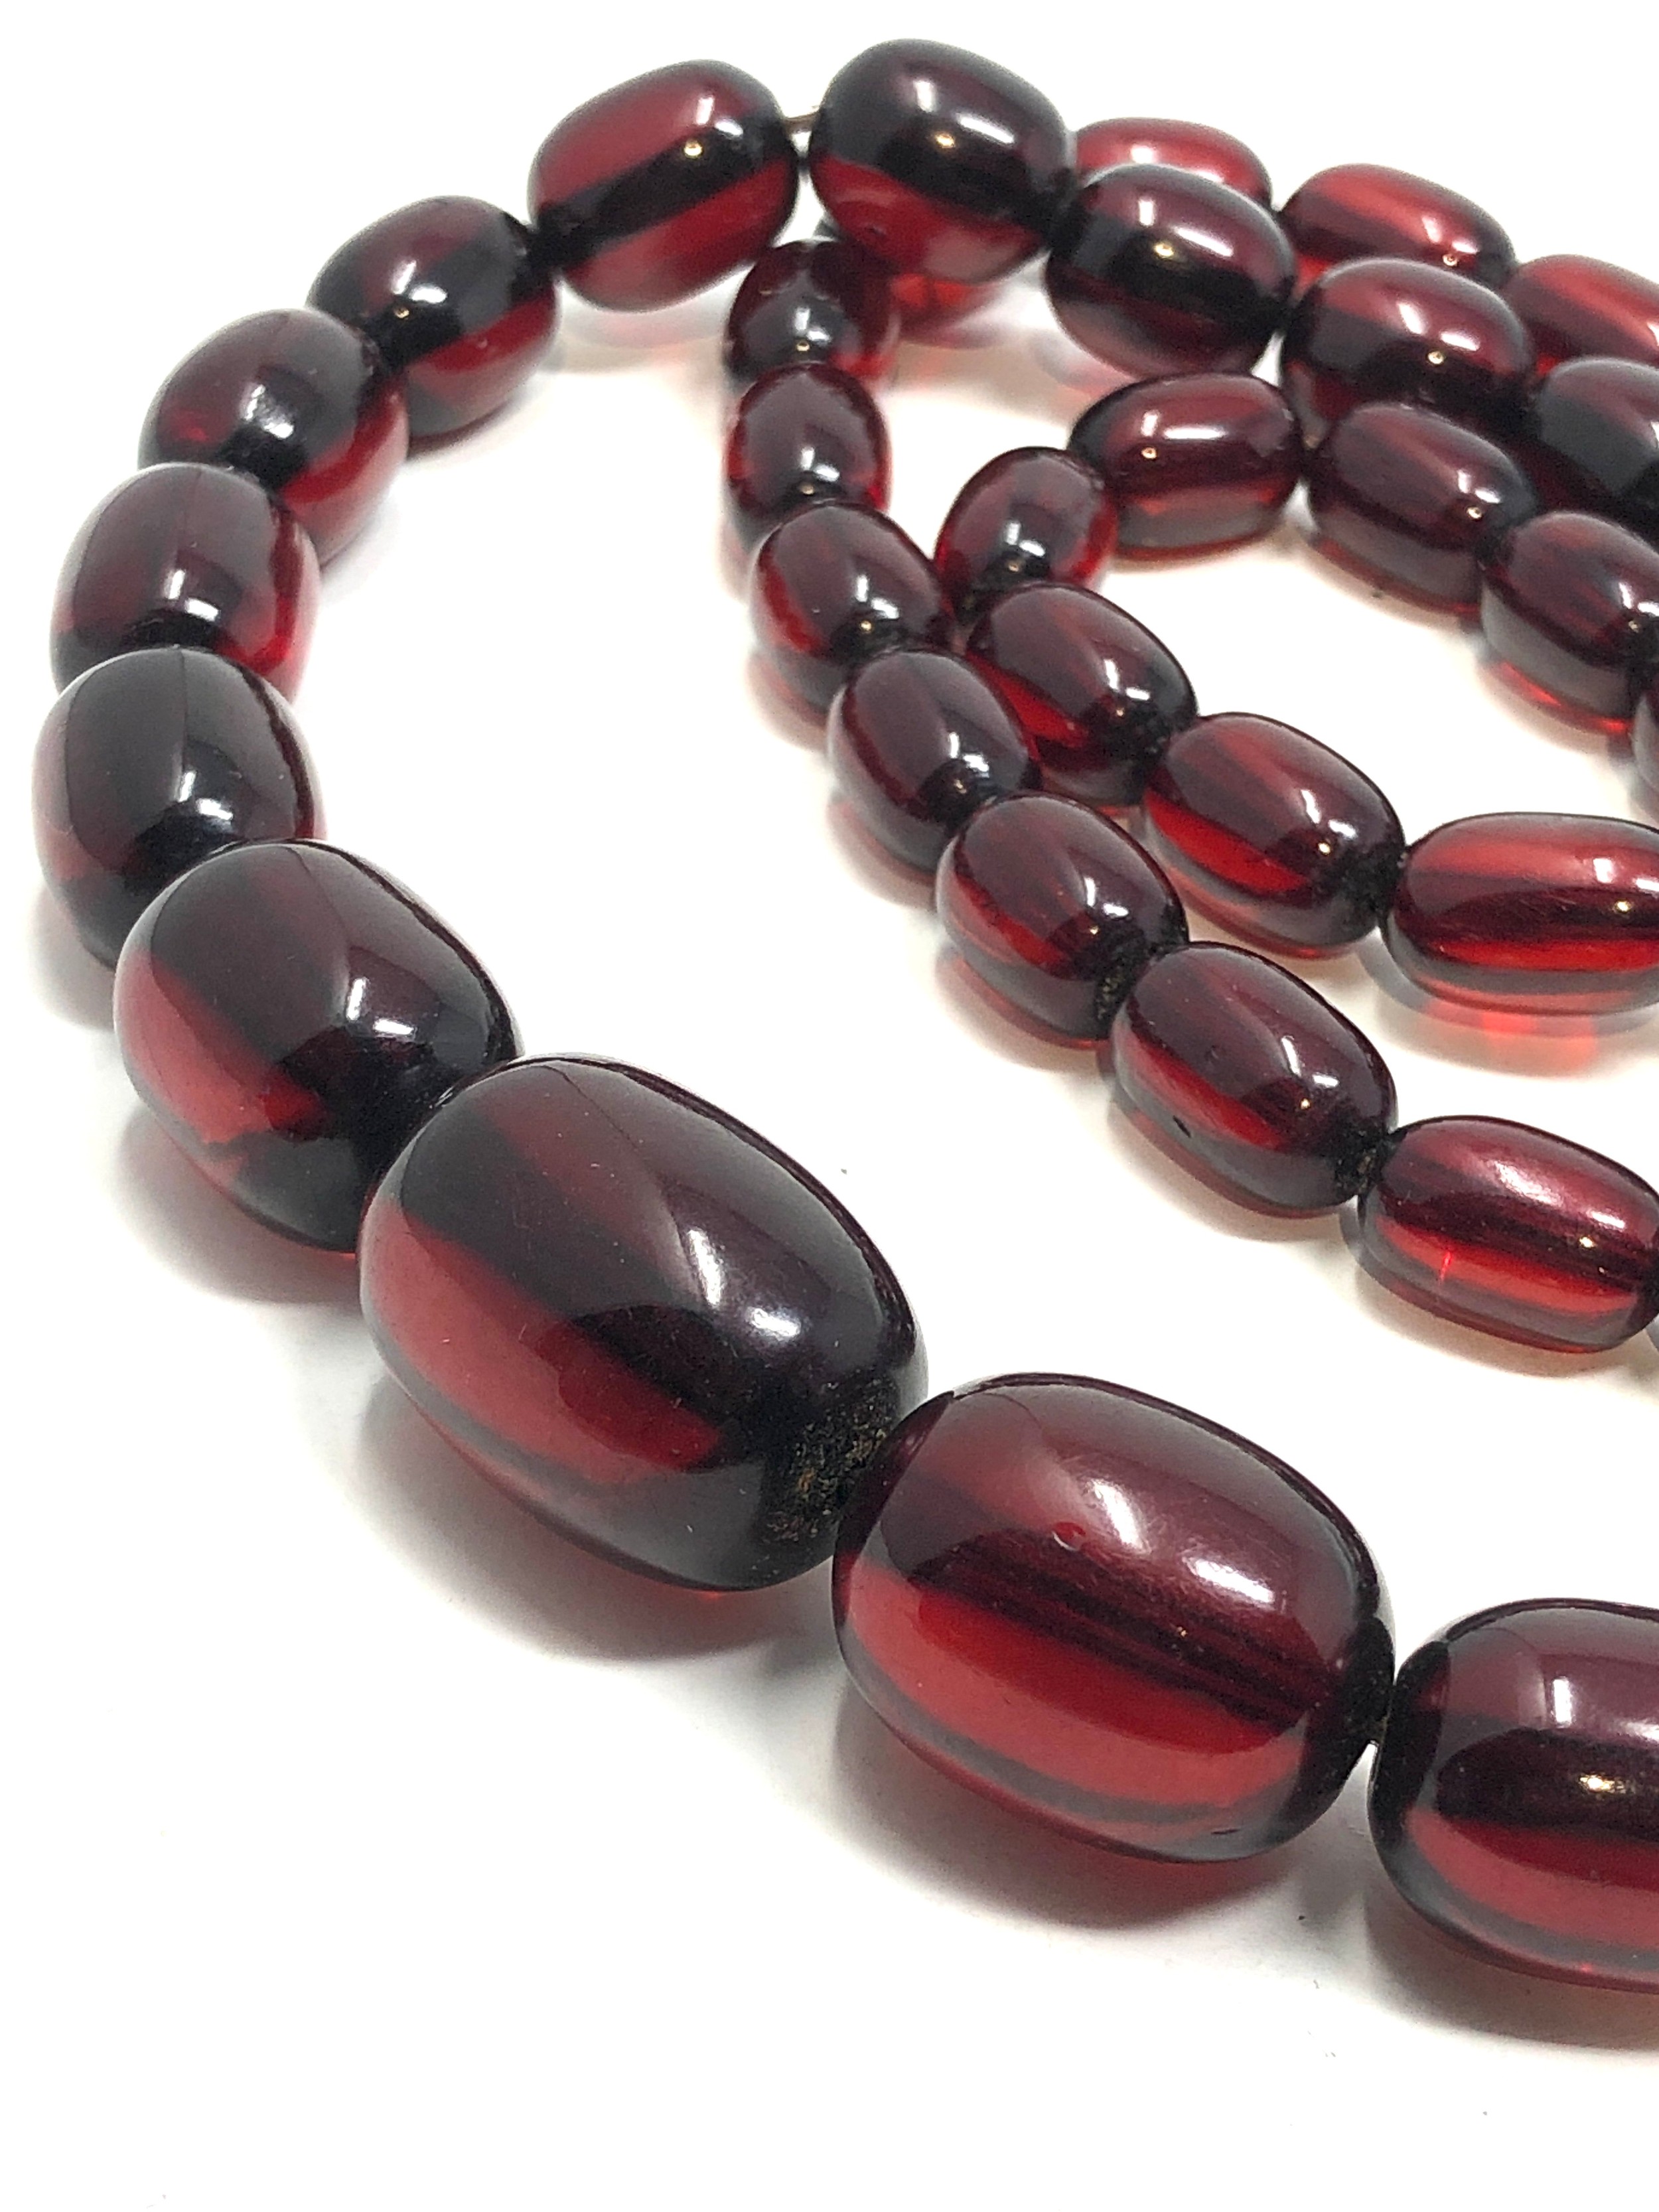 Antique prystal cherry bakelite bead graduated necklace (107g) - Image 2 of 3